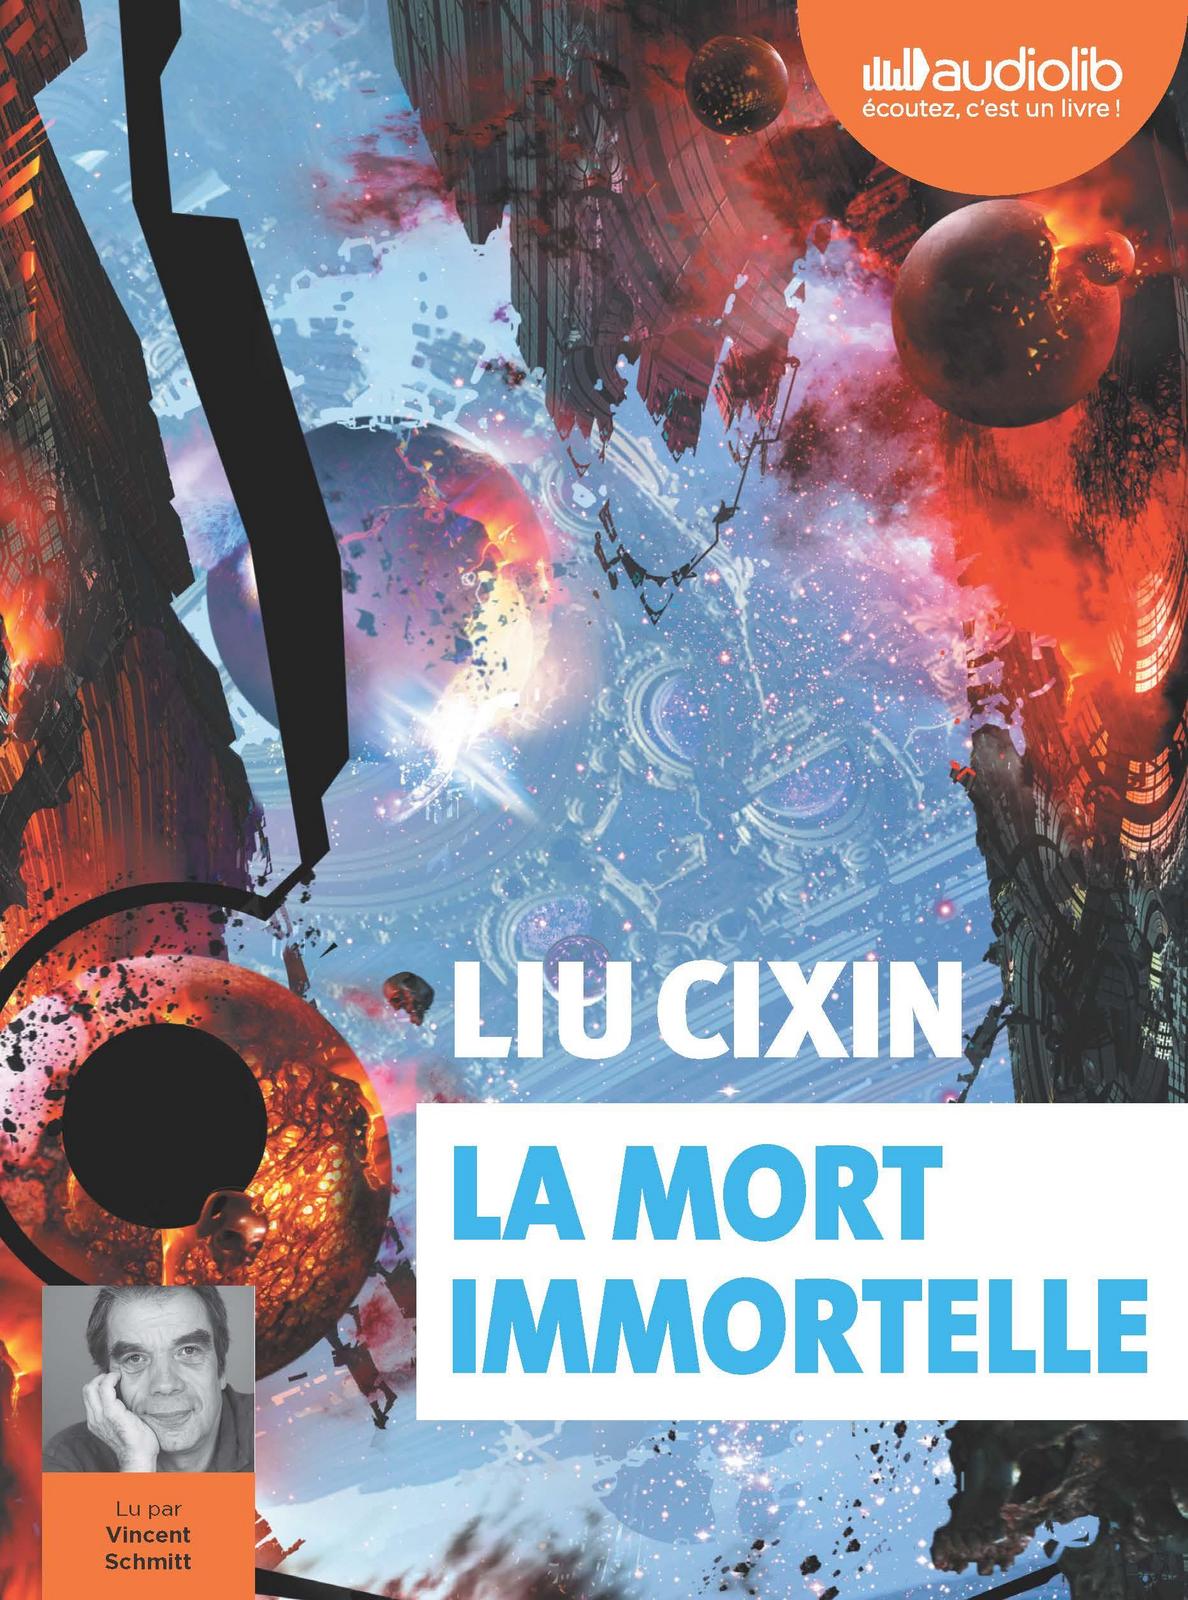 Liu Cixin, Vincent Schmitt, Gwennaël Gaffric: La mort immortelle (AudiobookFormat, French language, 2020, AUDIOLIB)